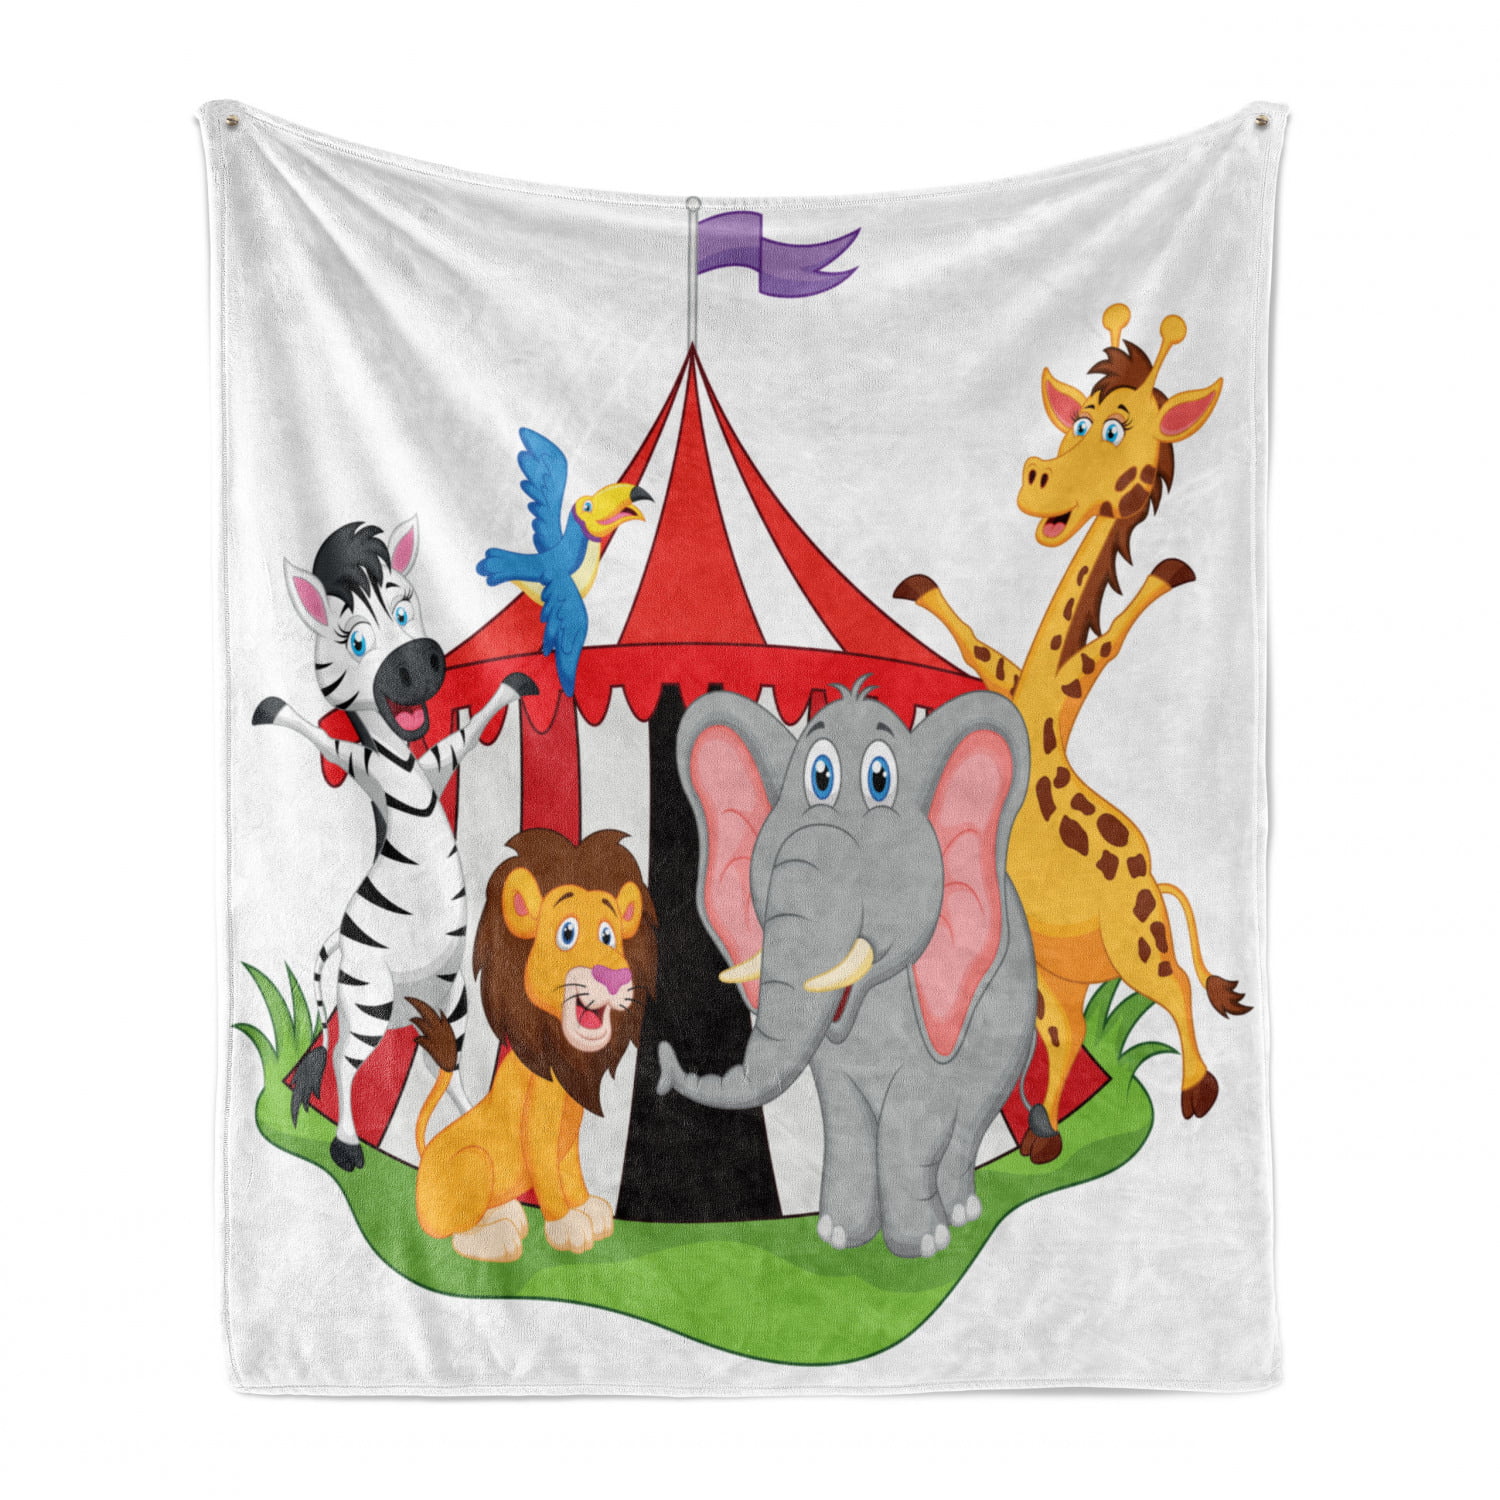 InterestPrint AnnHomeArt Indian Elephant Fleece Throw Blanket for Bed Sofa 40''x50'' 